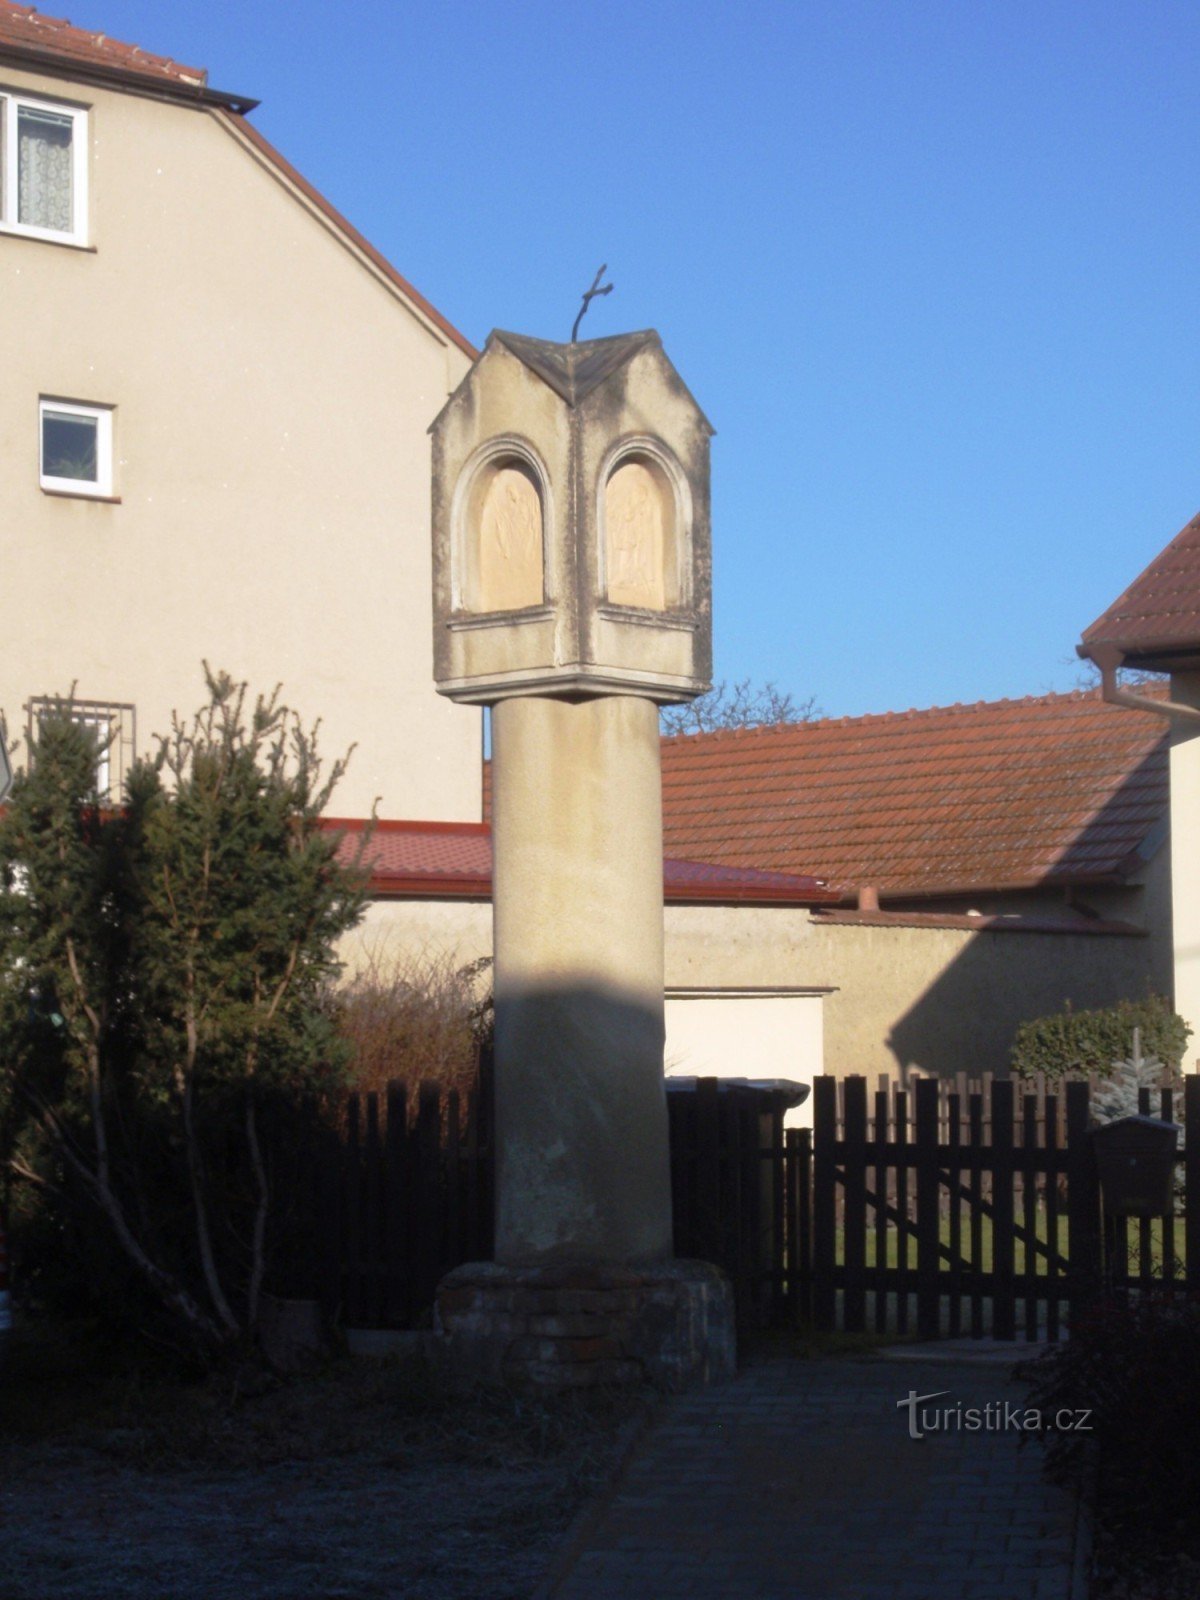 Troubsko - mici monumente